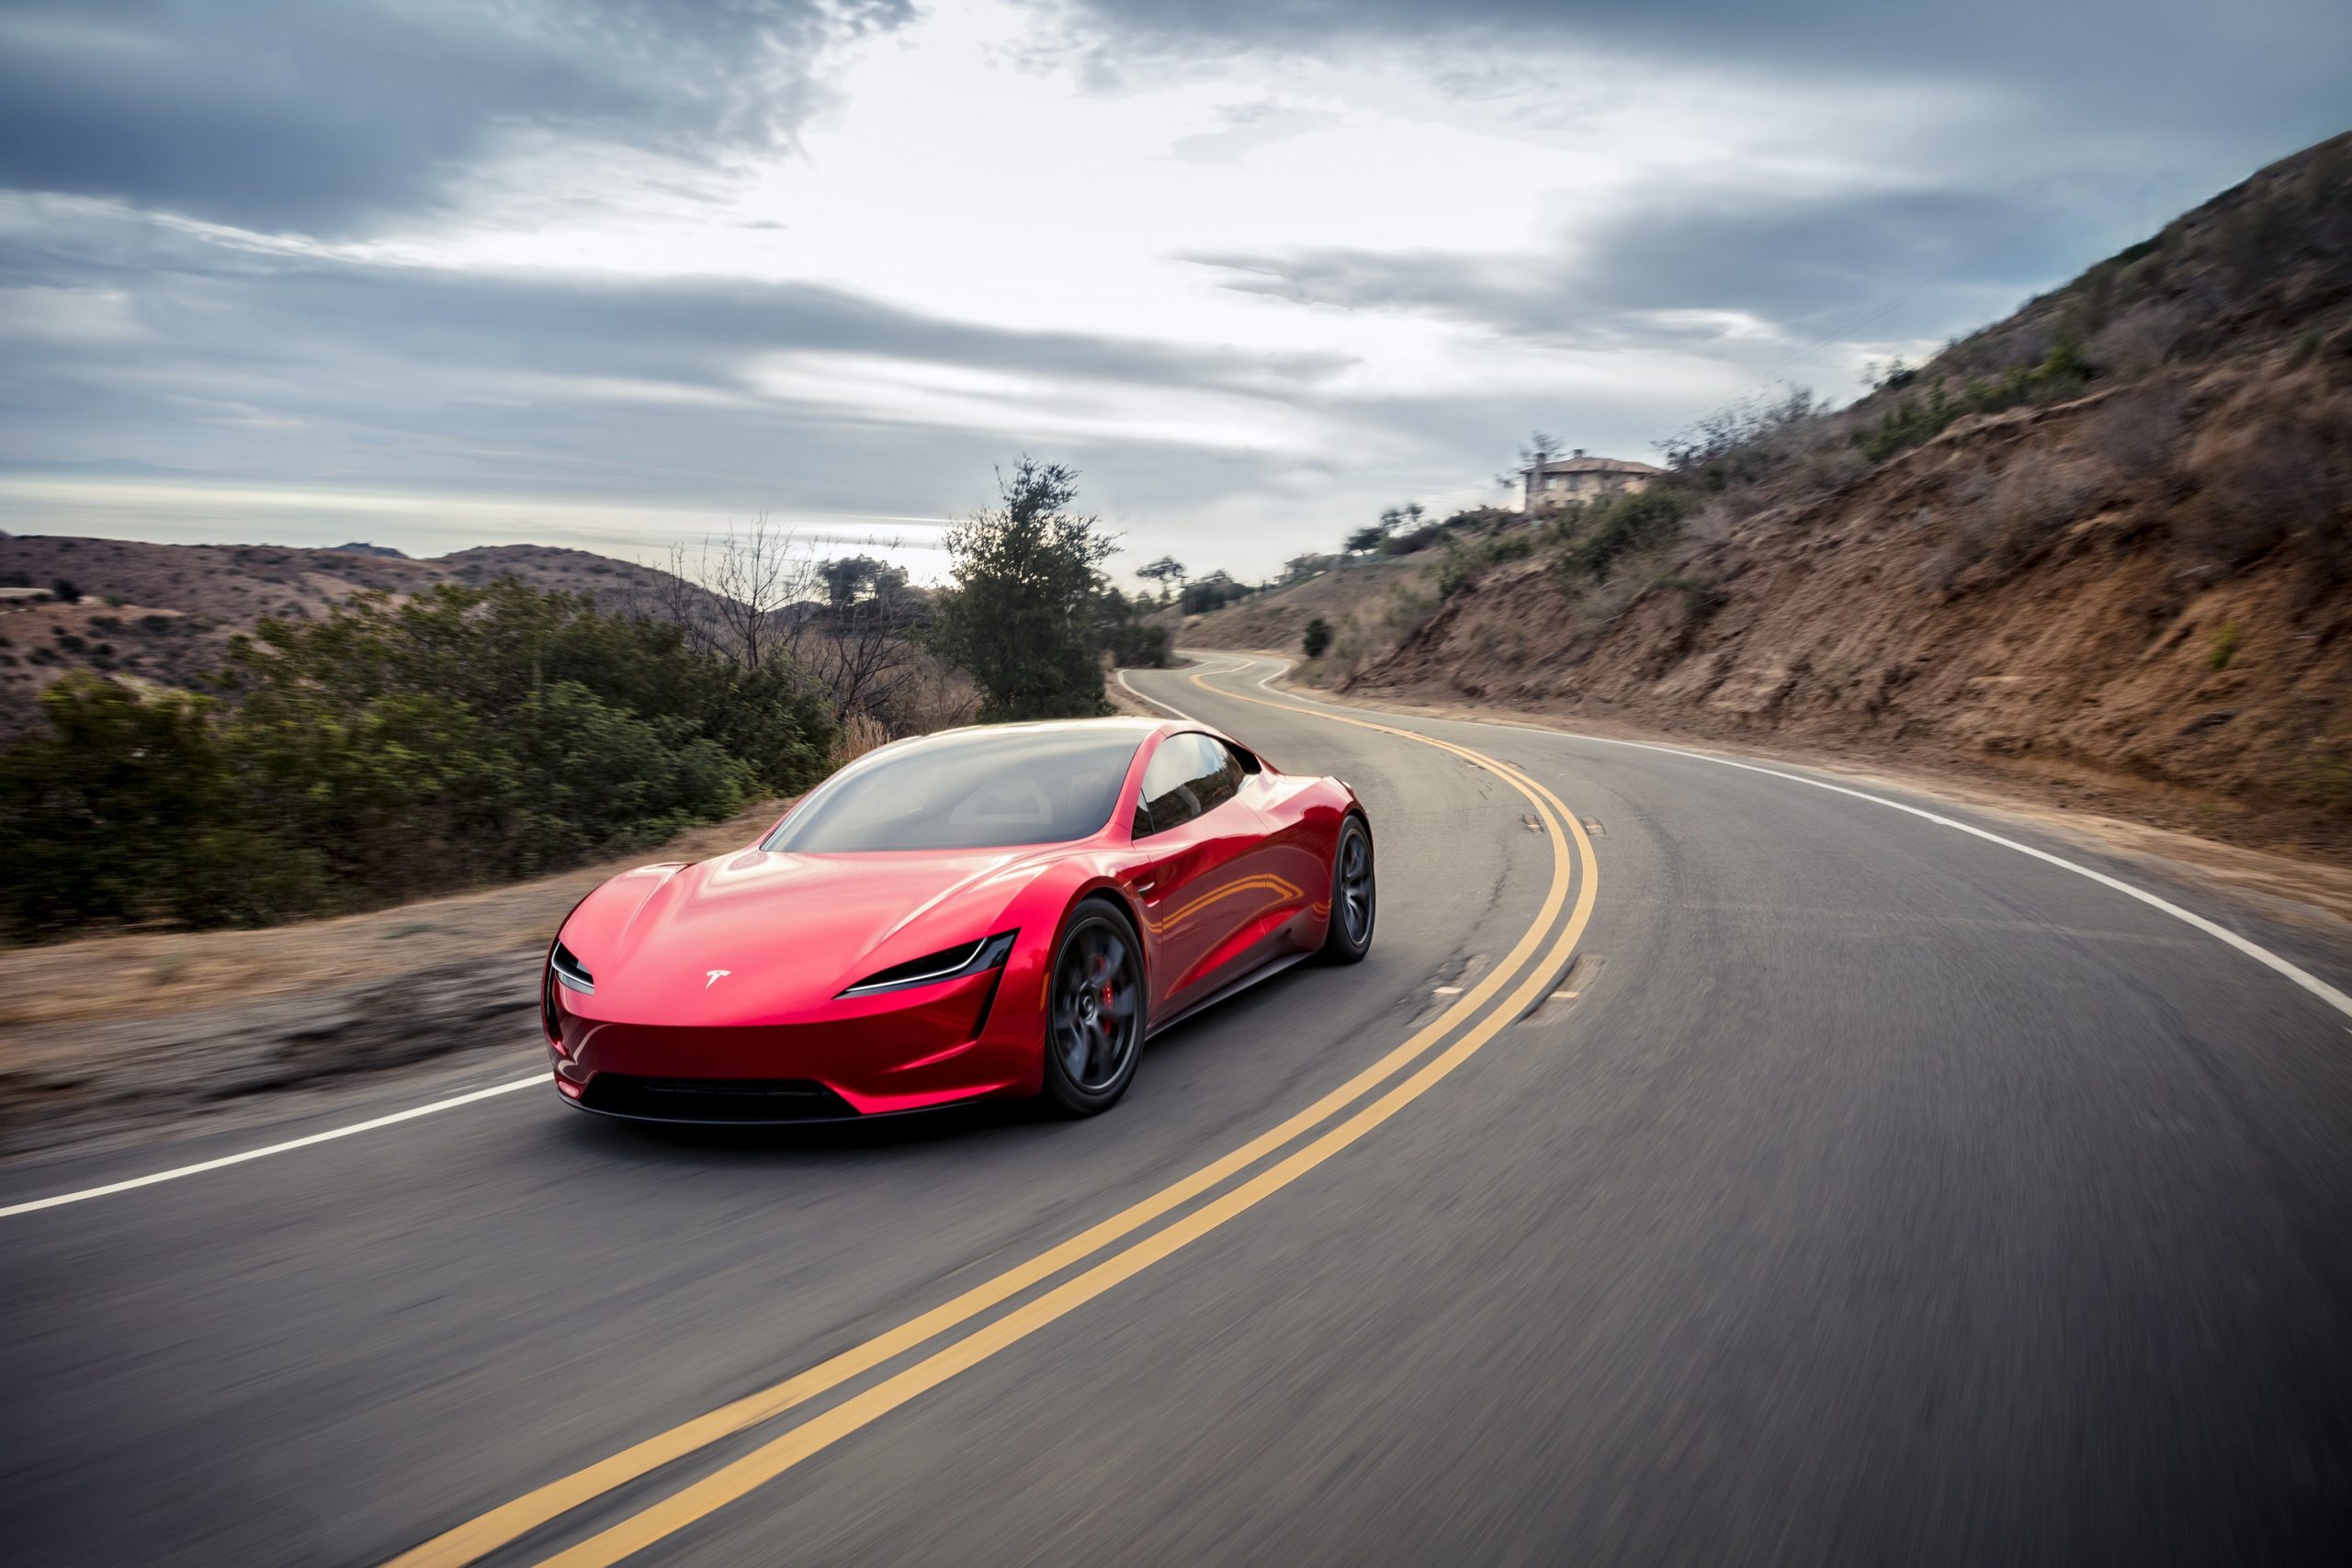 A red Tesla Roadster on a back road